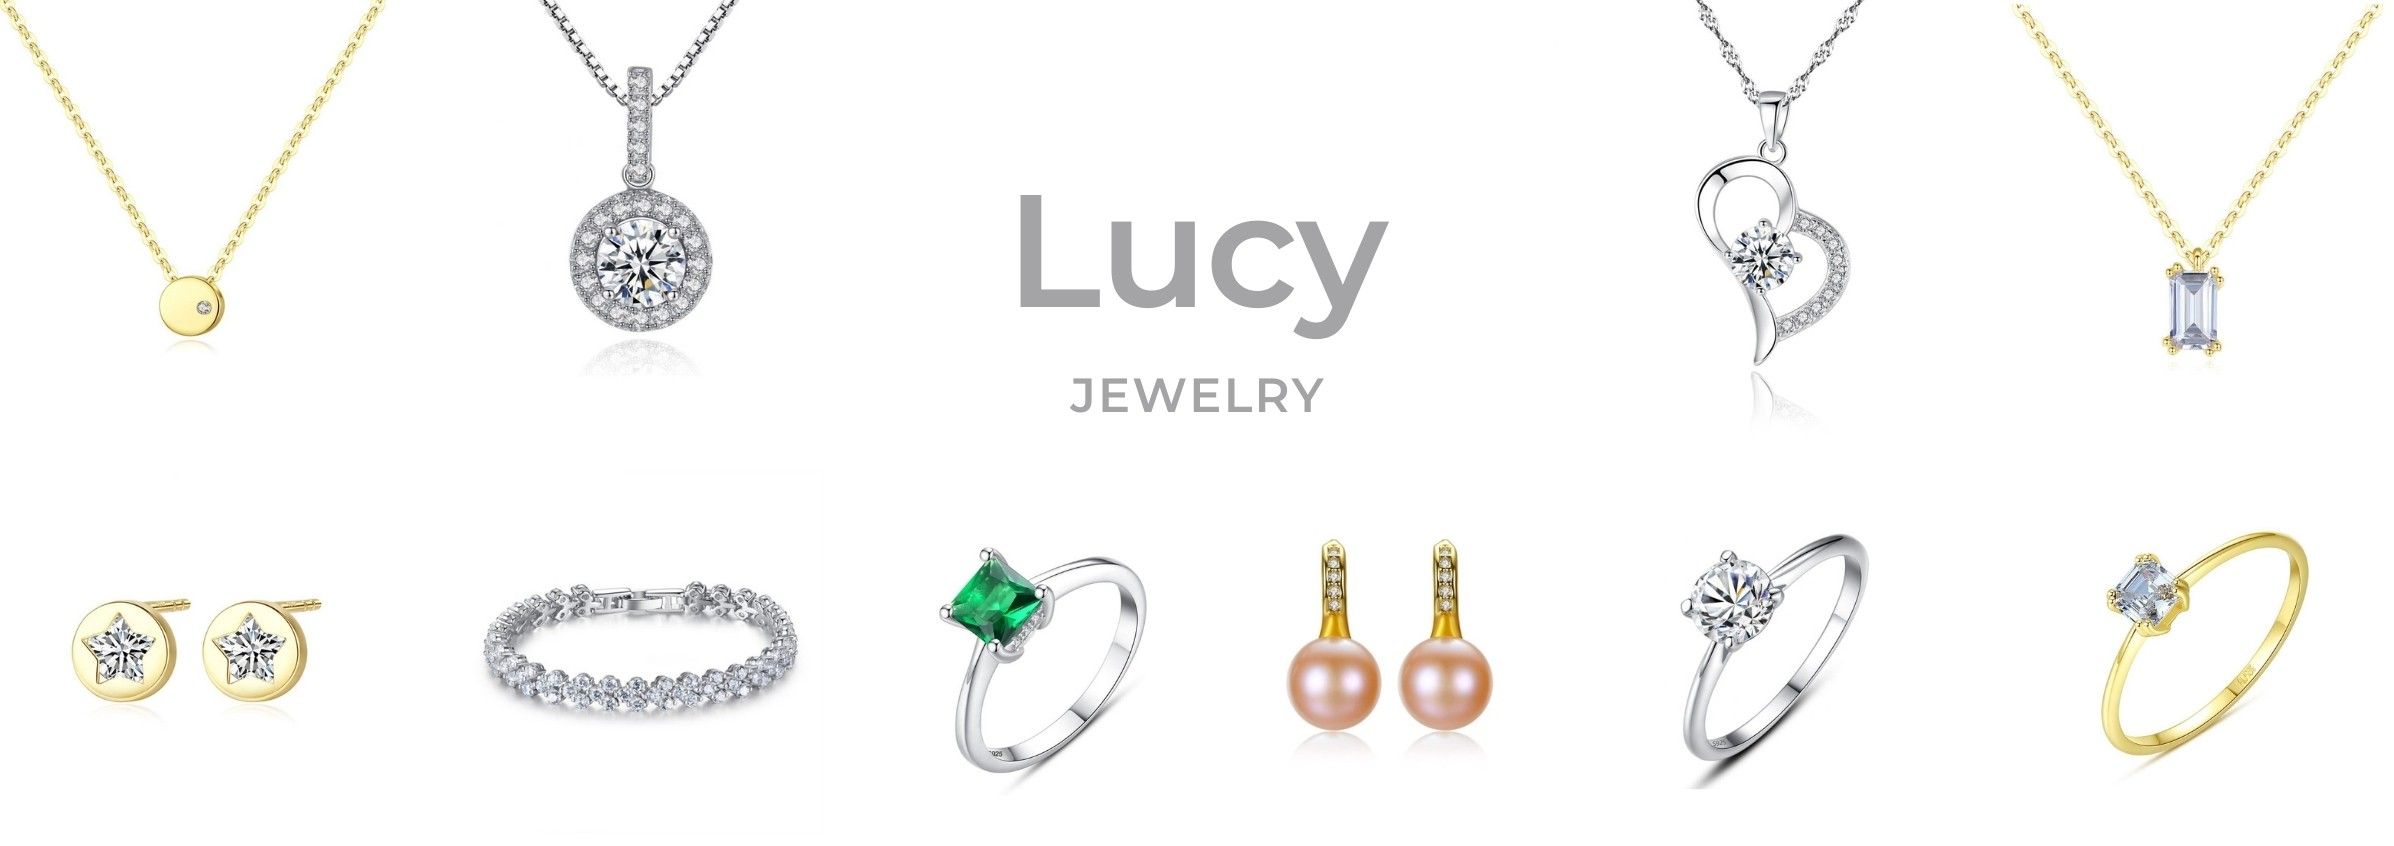 Lucy Jewelry Wholesale